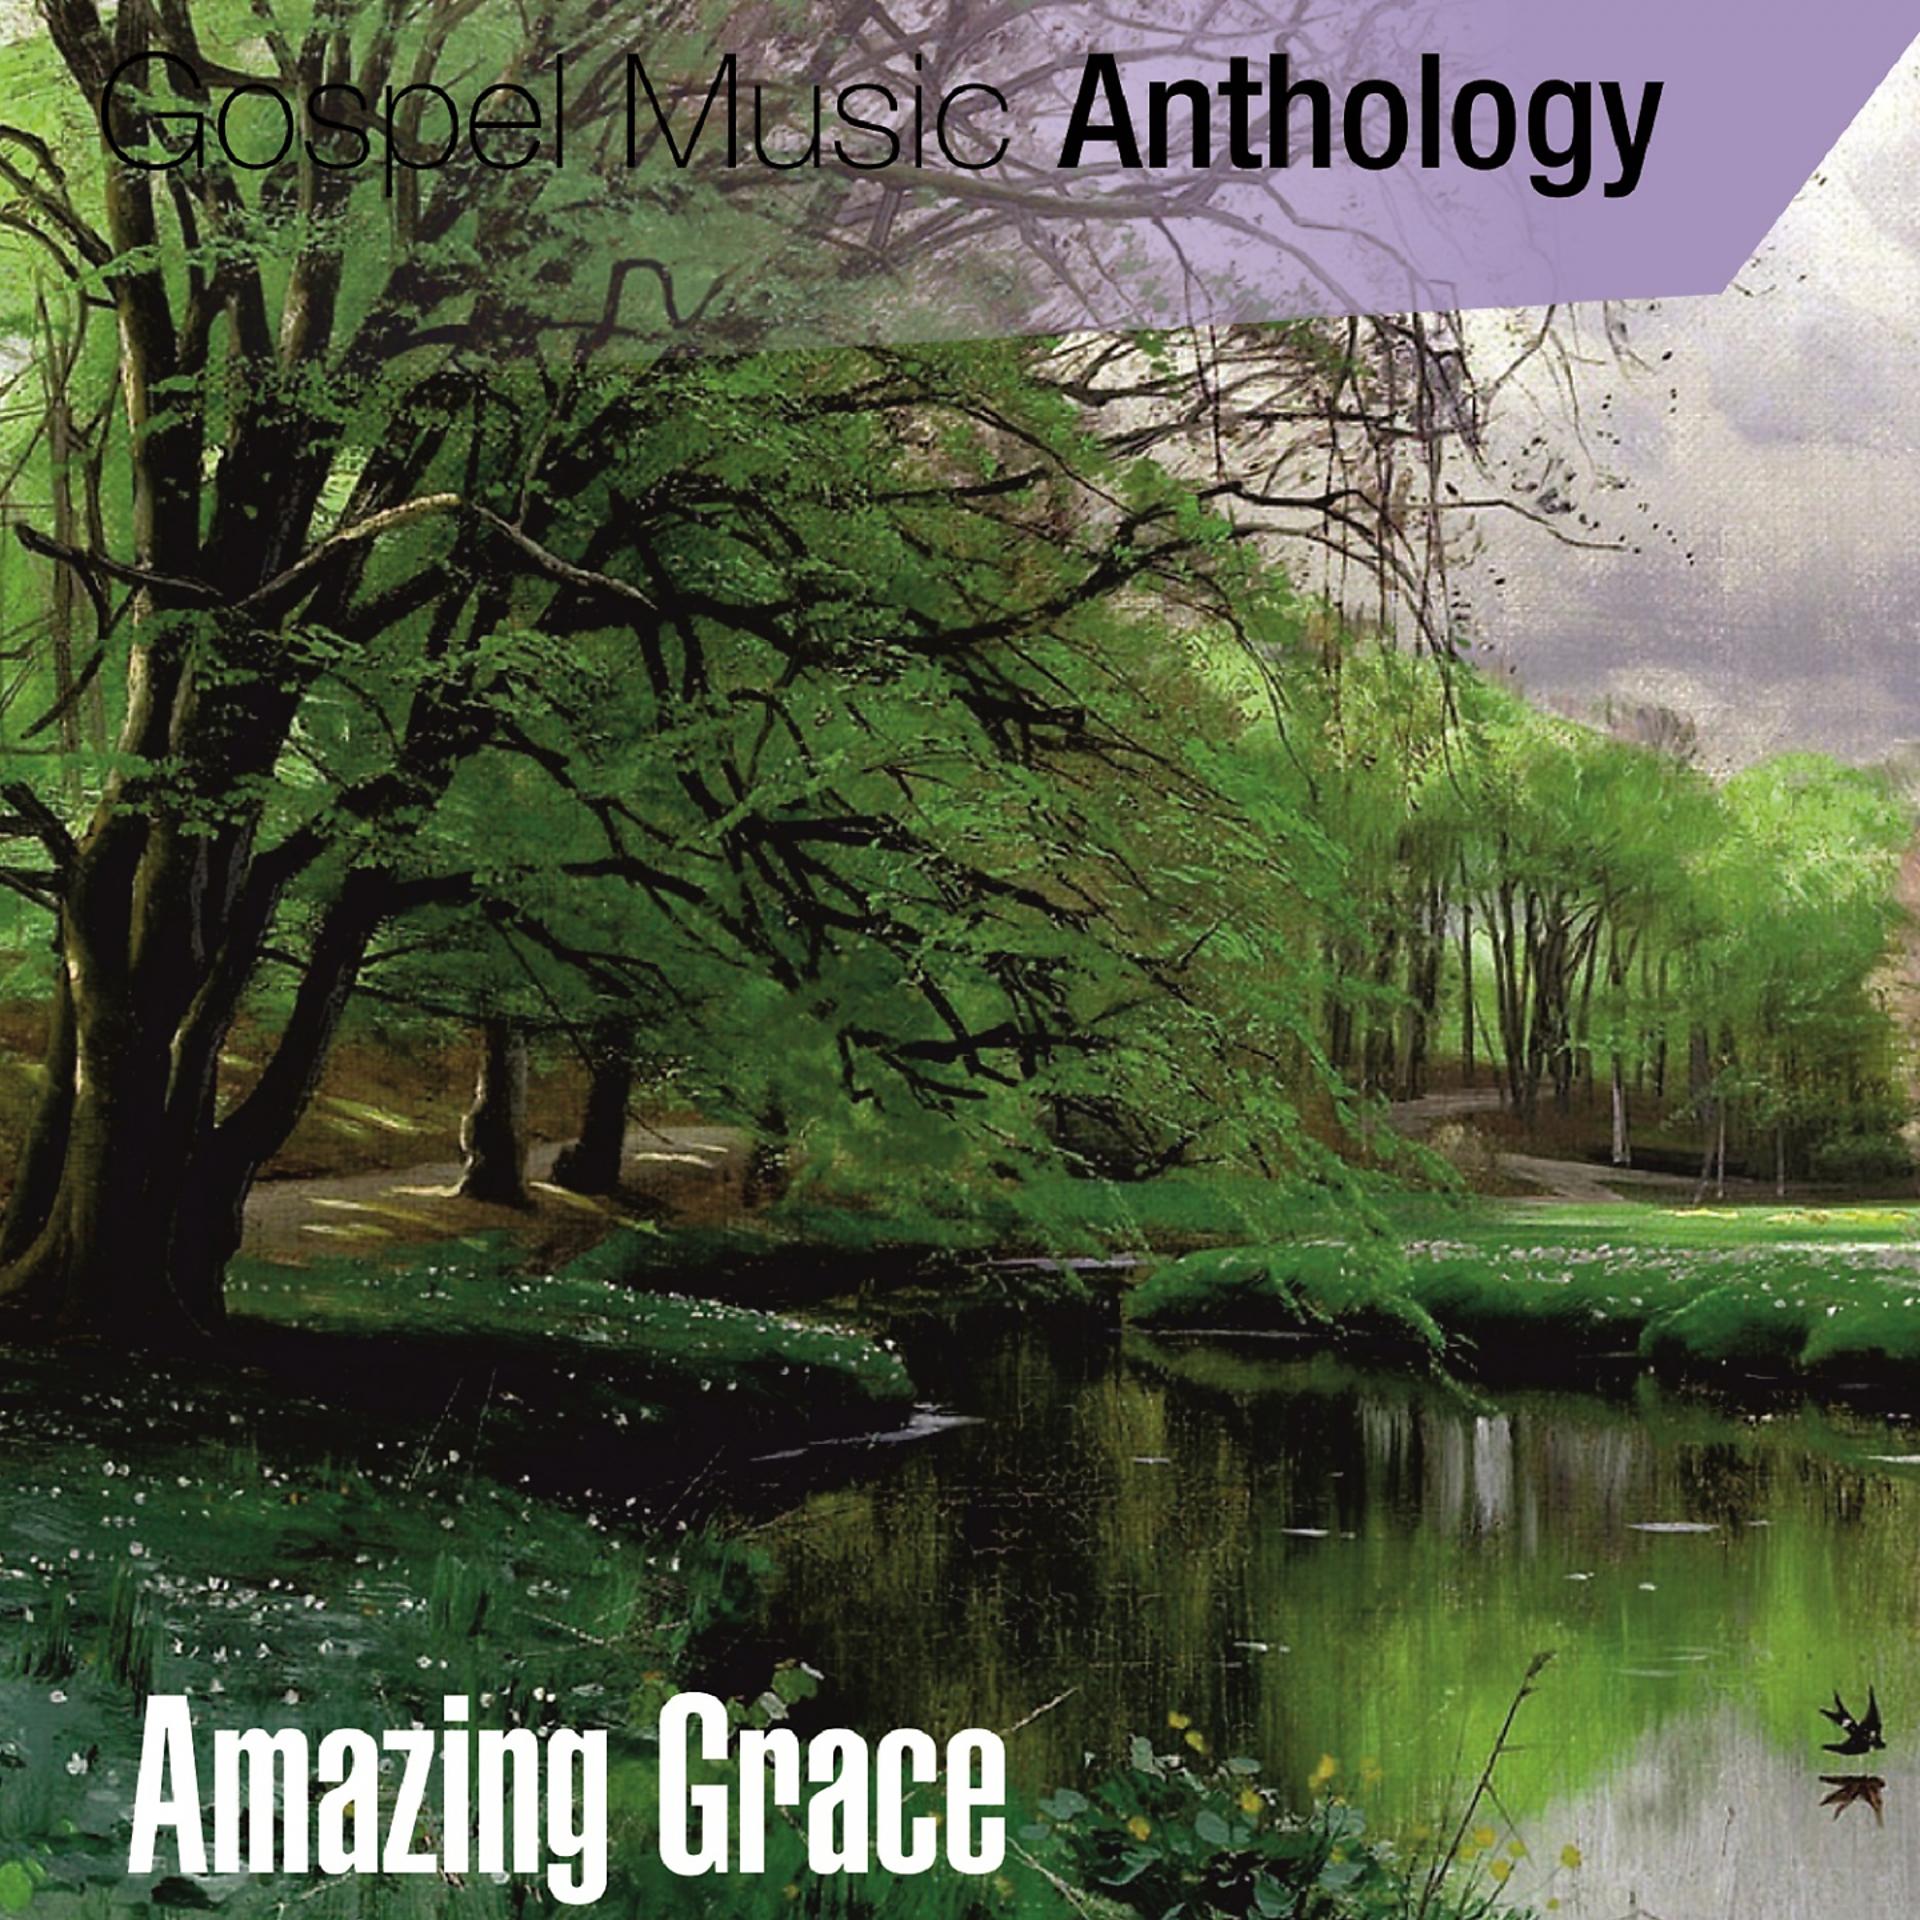 Постер альбома Gospel Music Anthology